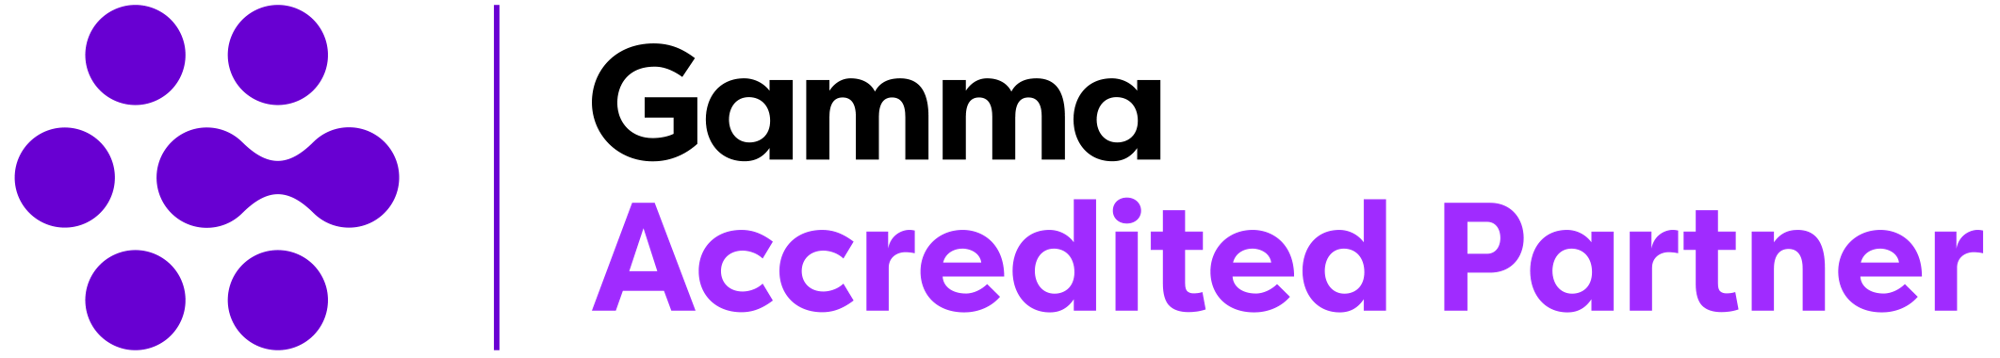 Gamma Accredited Partner Logo Purple Black - PNG